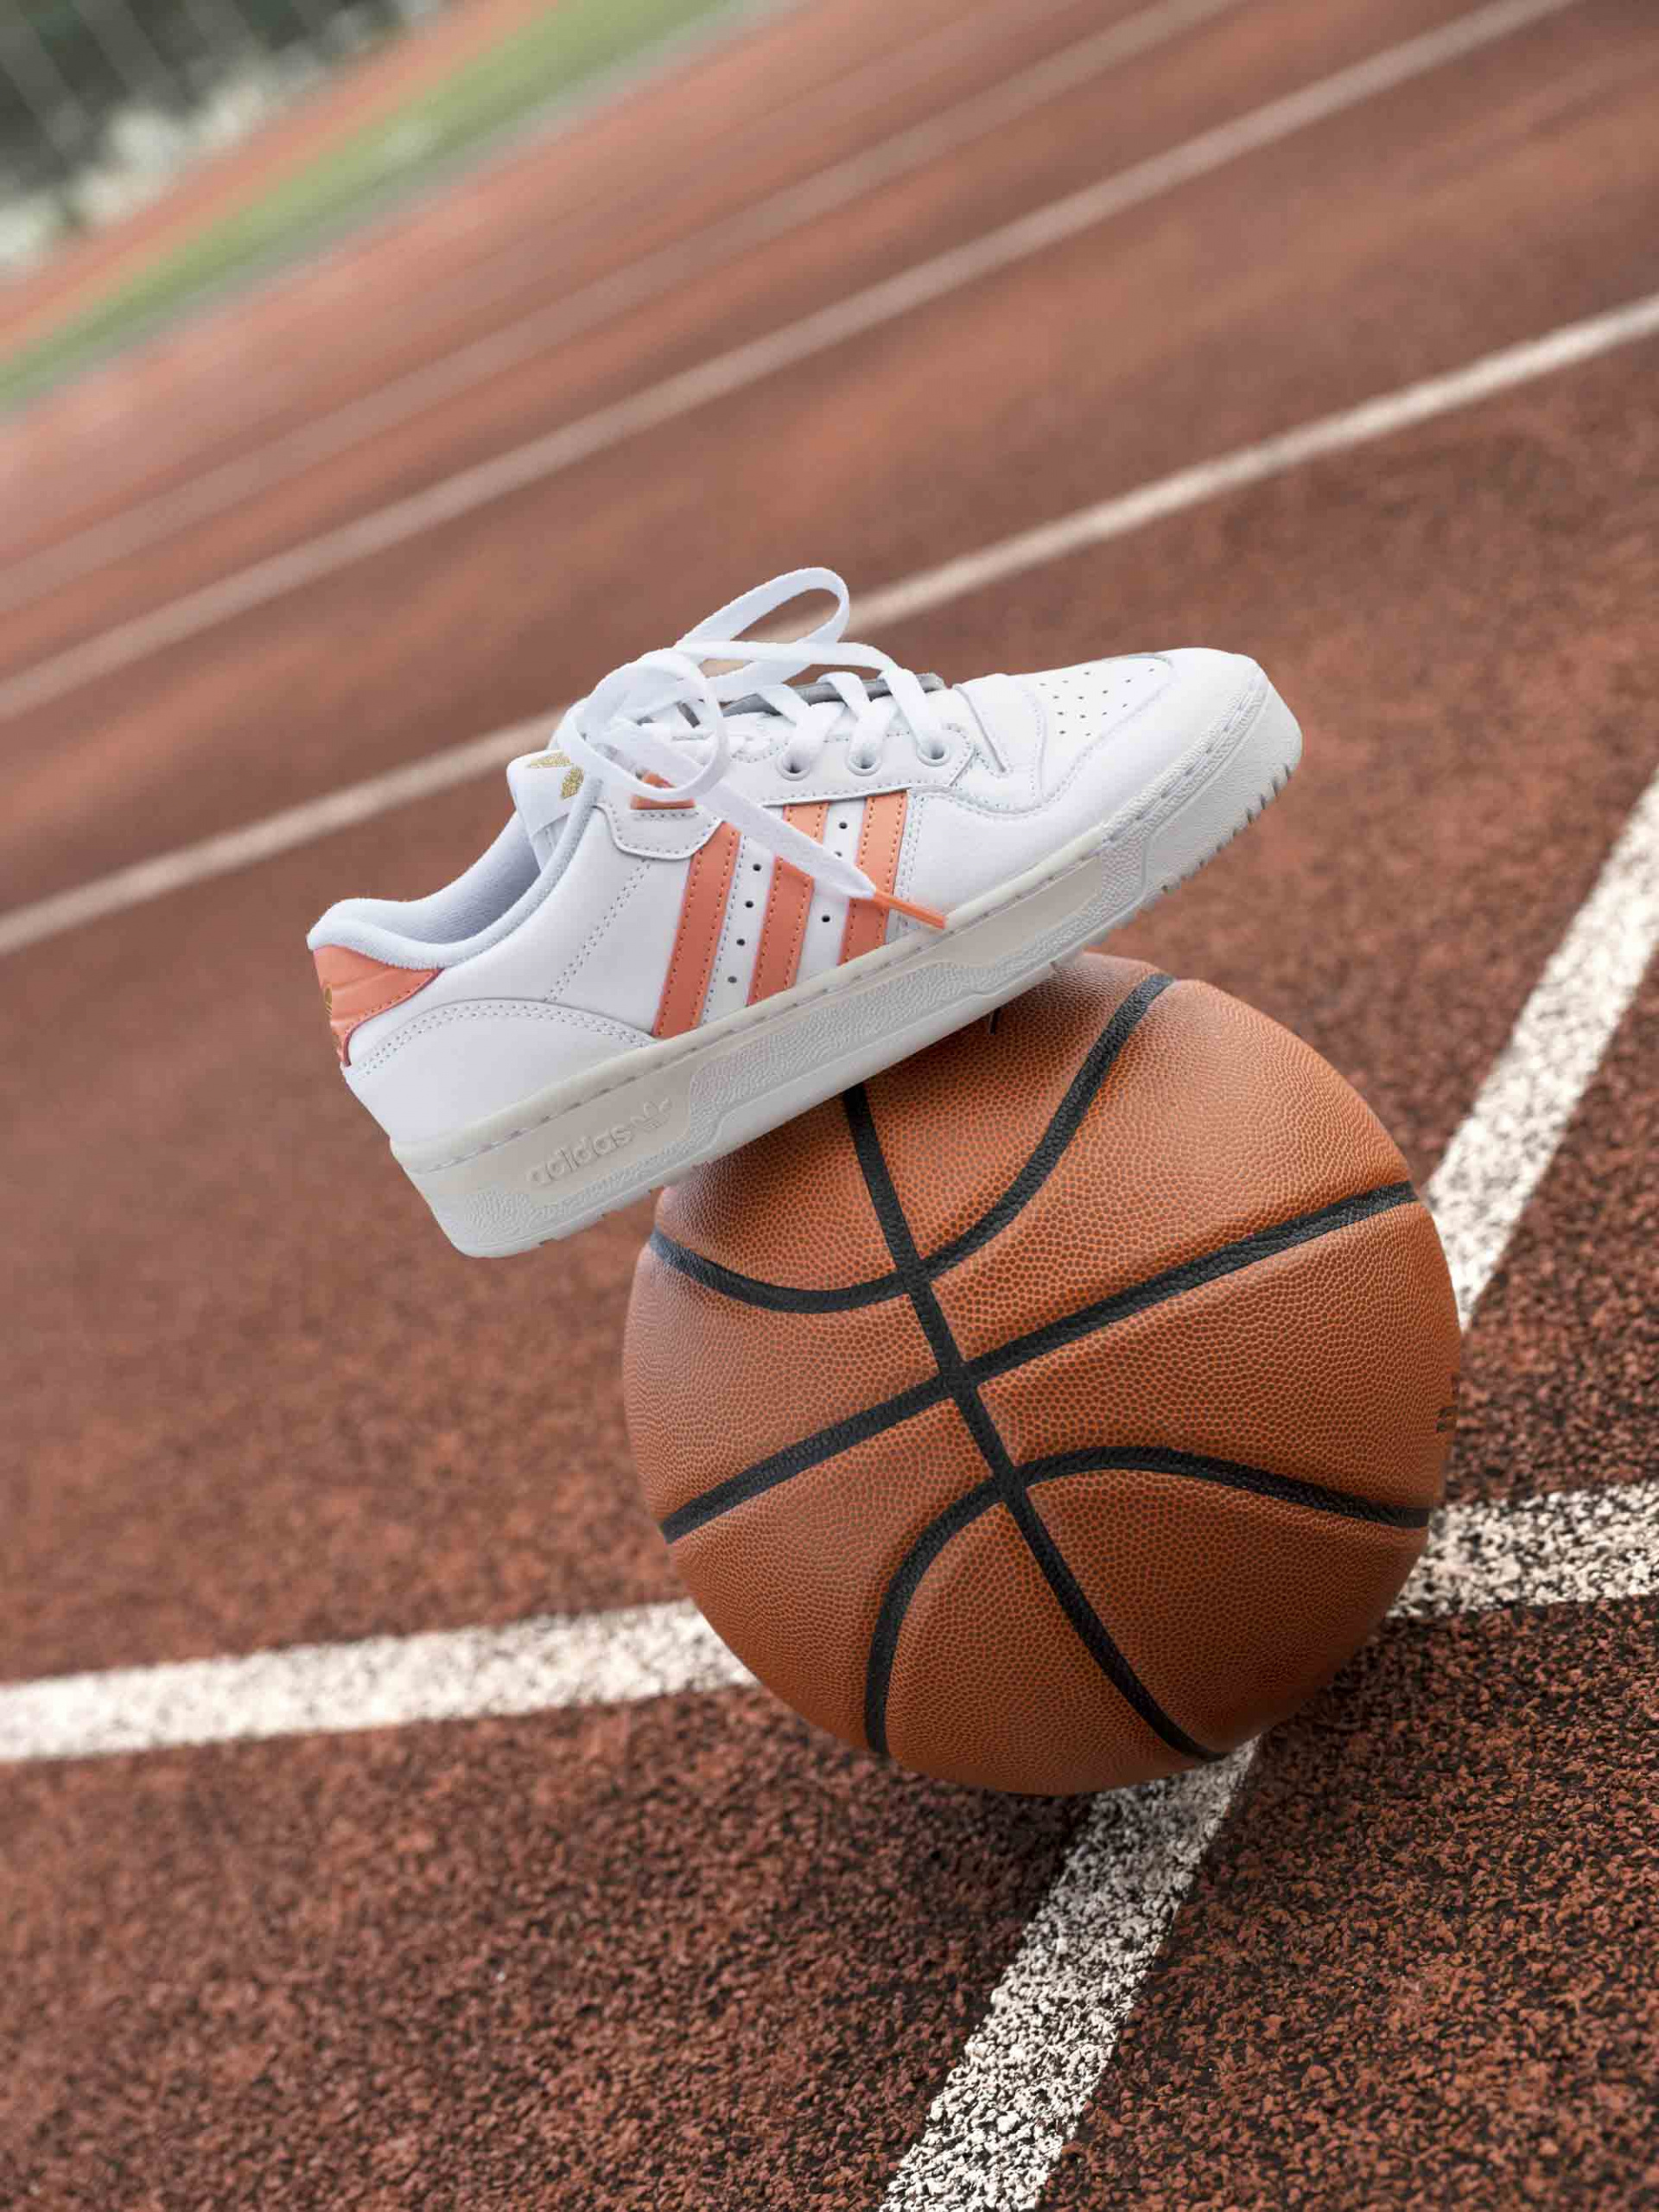 Adidas Rivarly shoes basket ball track athletic - fashion photography lifestyle Asia-thumbnail